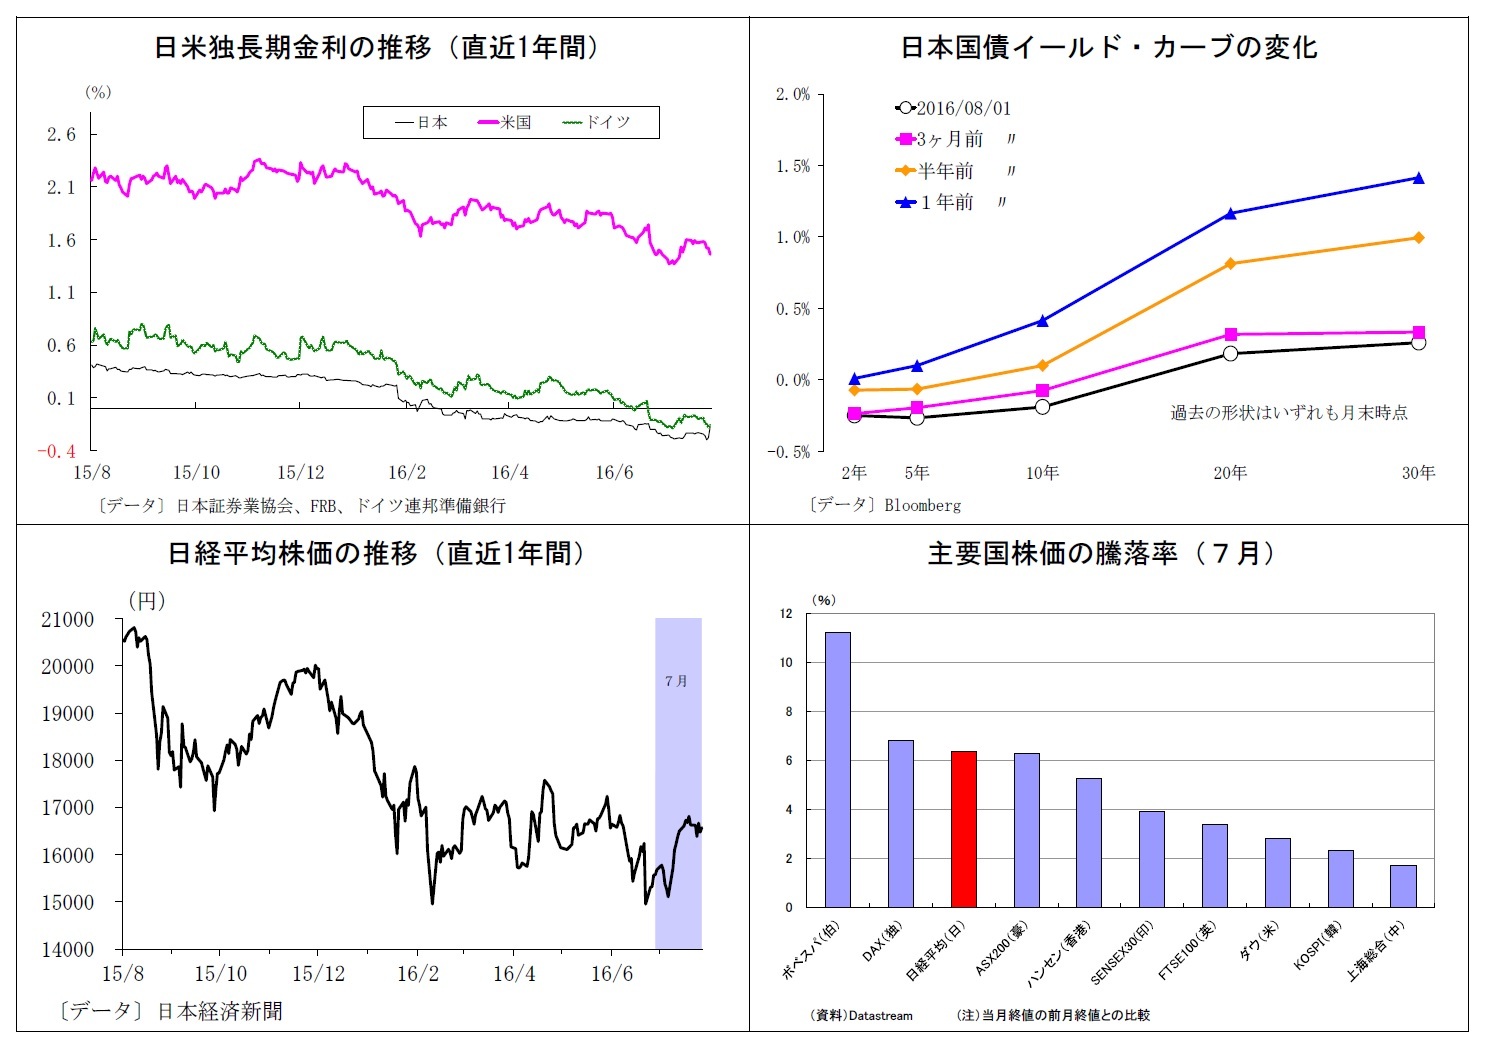 日米独長期金利の推移（直近1年間）/日本国債イールド・カーブの変化/日経平均株価の推移（直近1年間）/主要国株価の騰落率（７月）